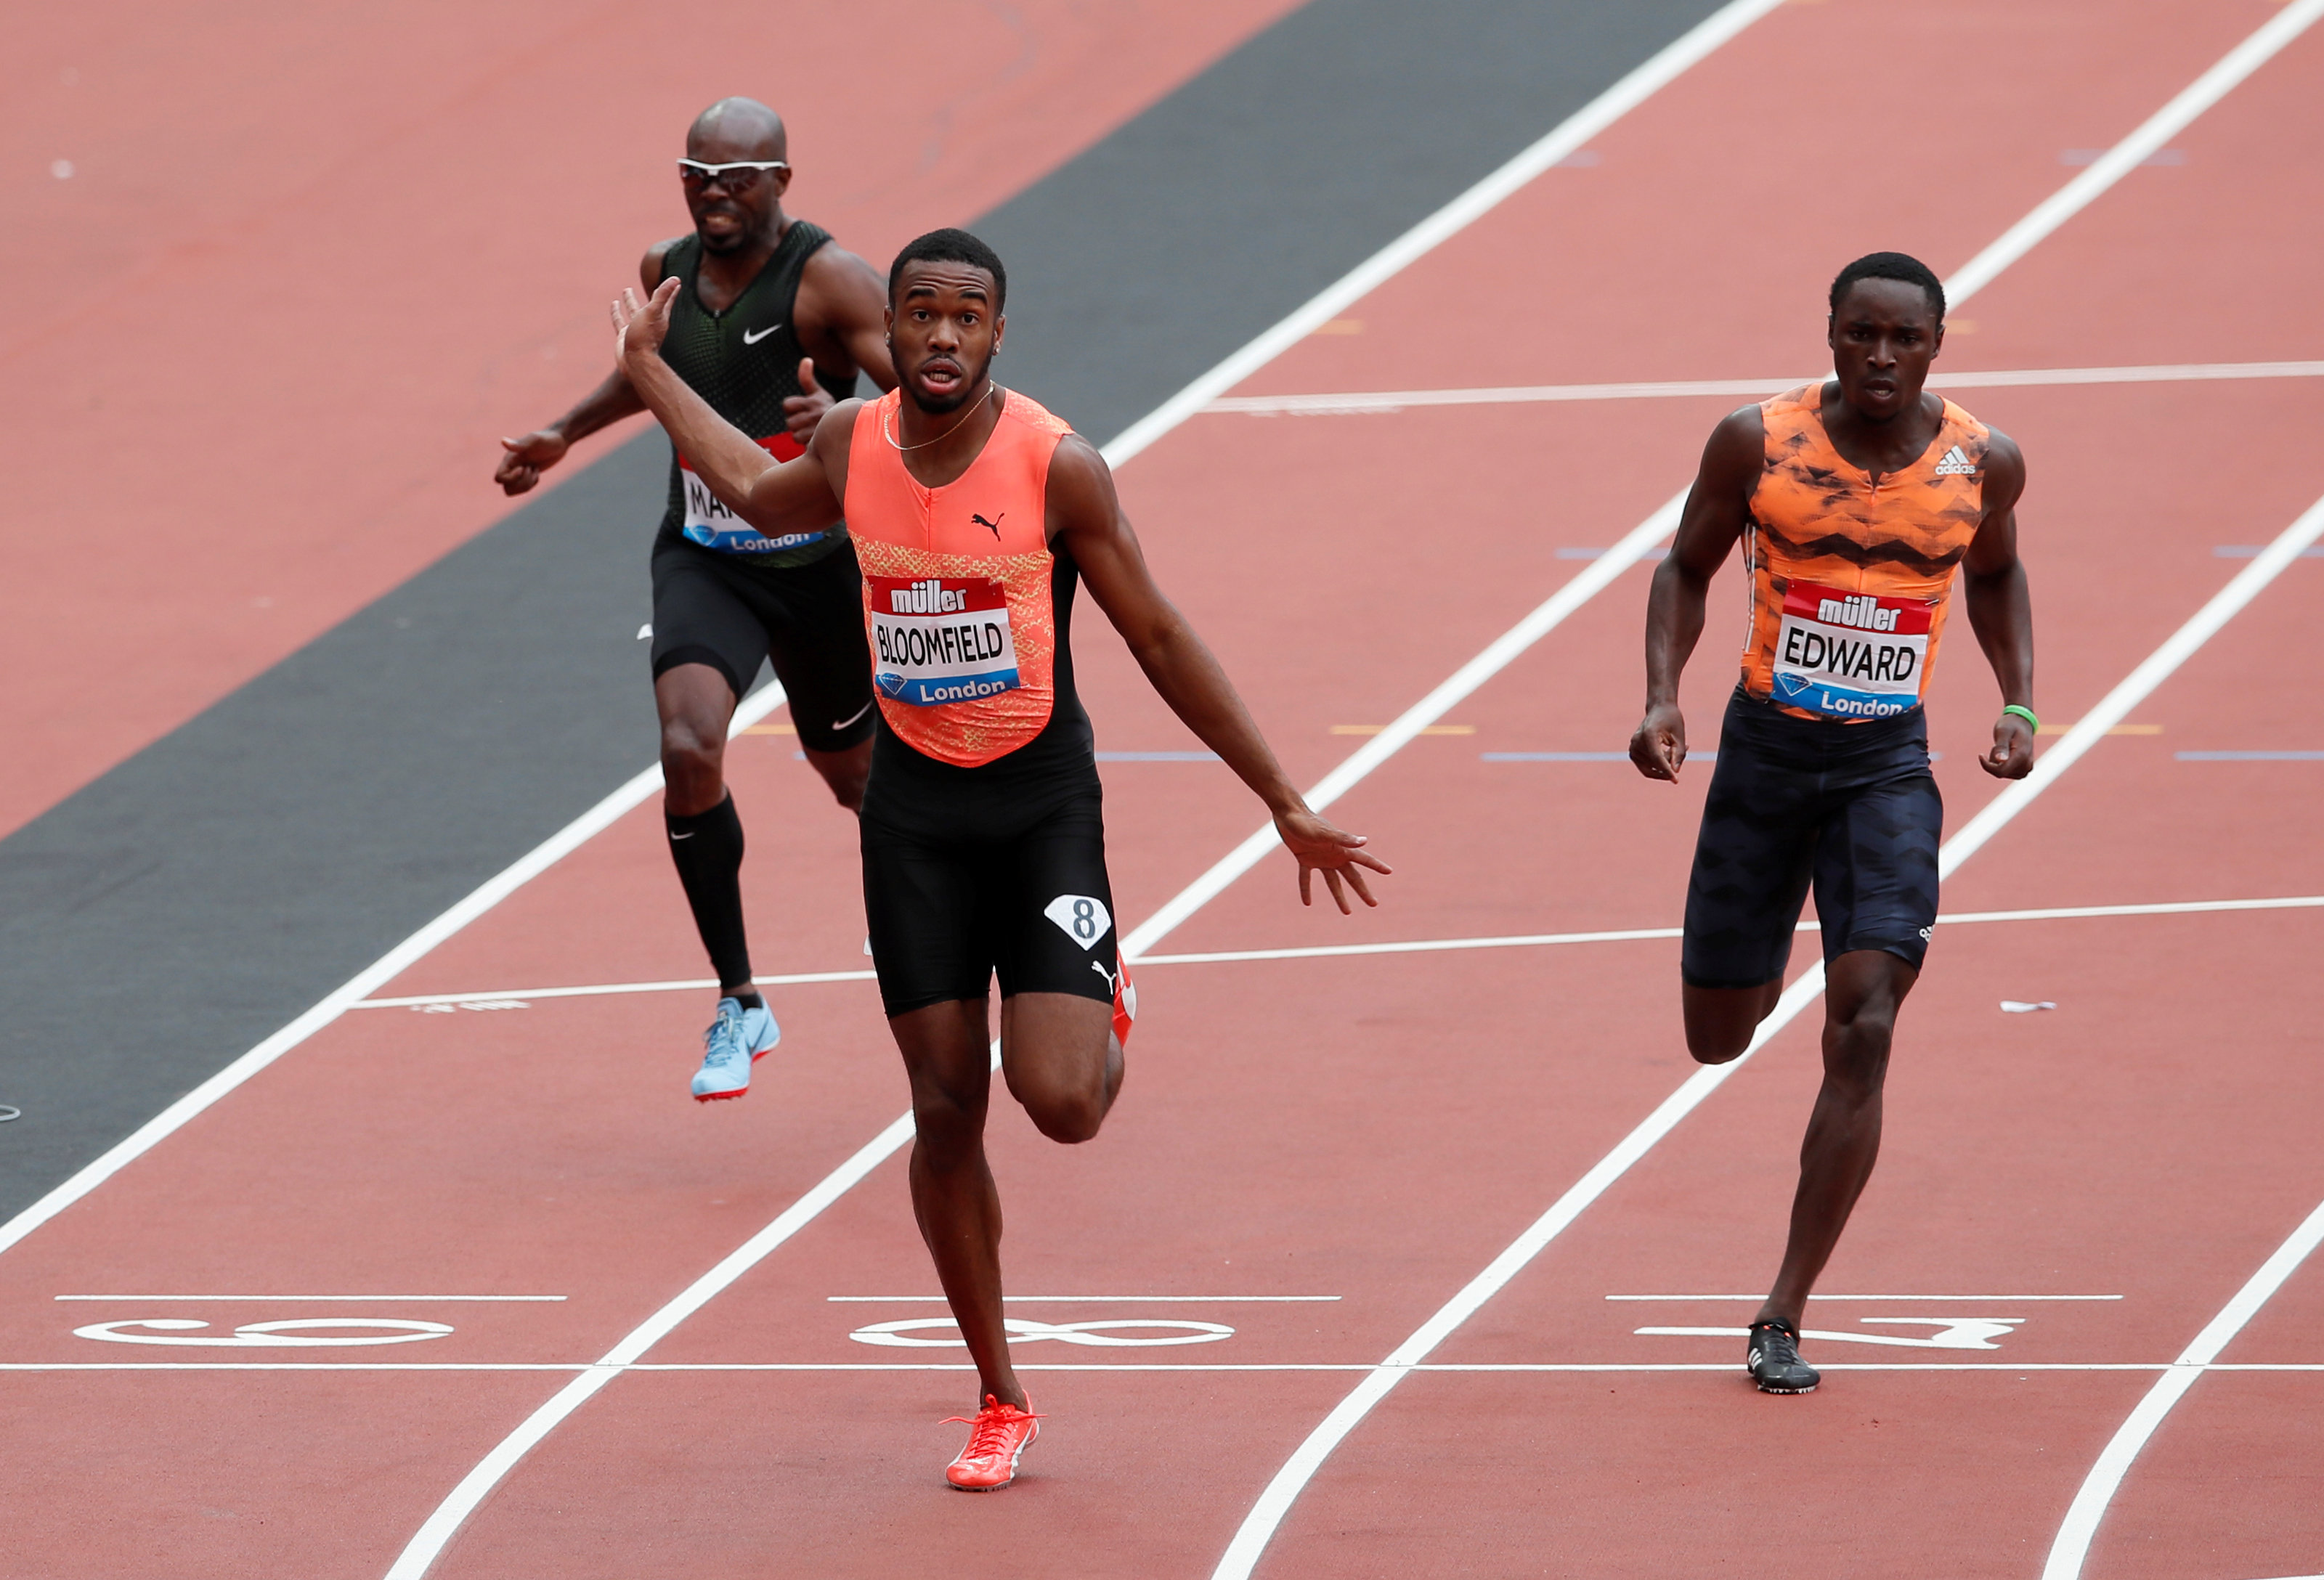 Athletics: Don't compare me to Bolt says Jamaica's latest sprint hope